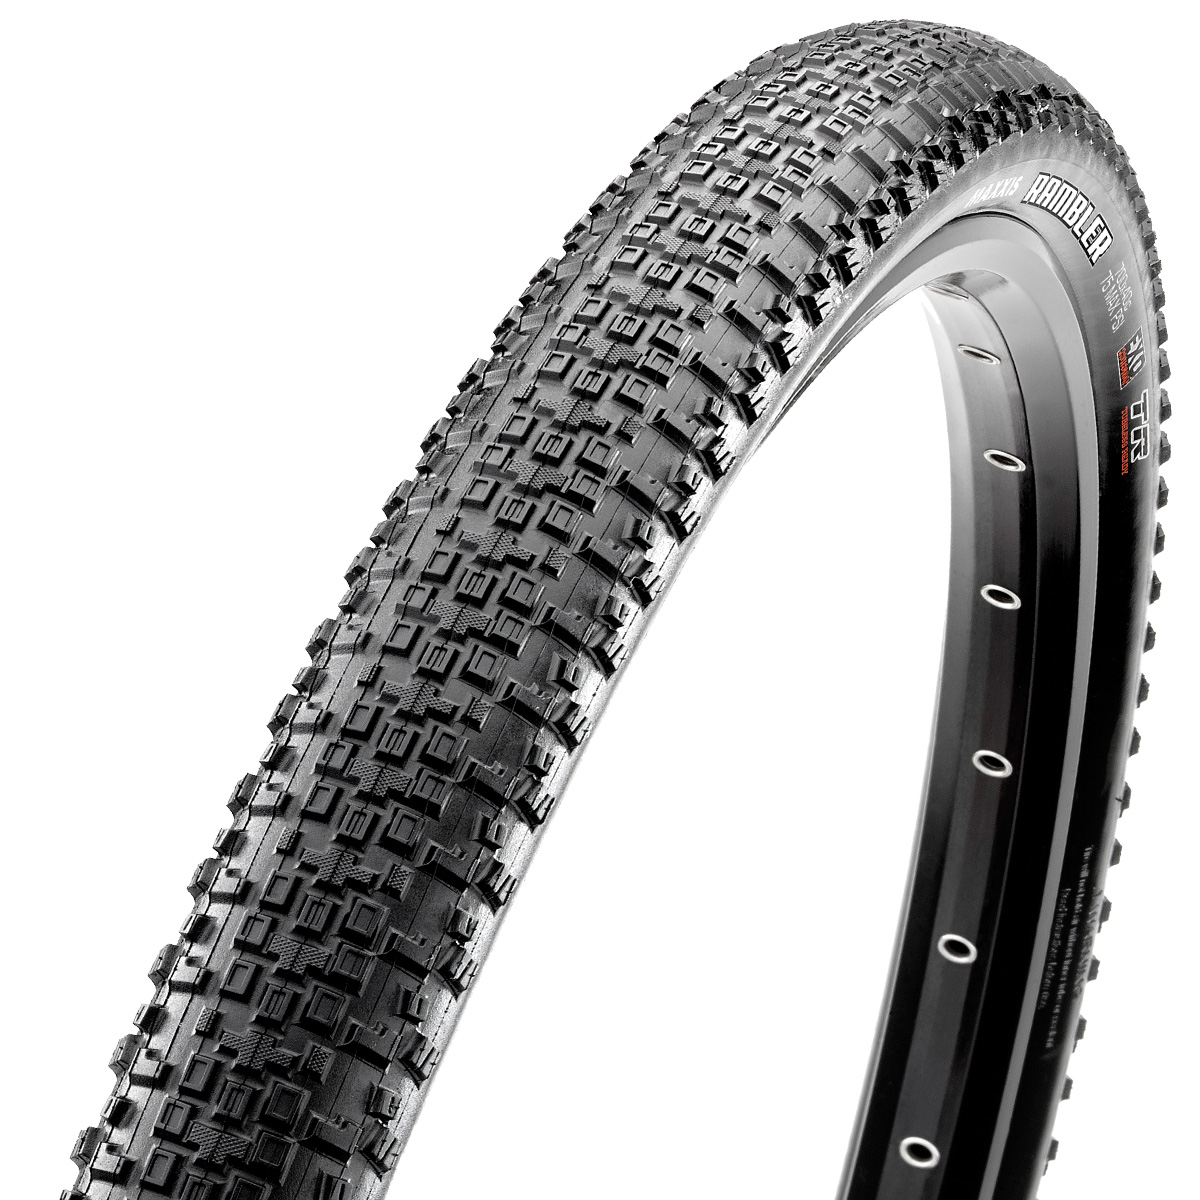 Details about   New Maxxis Rambler Tire 700 x 40c Bike Tire Silk Shield Gravel Cyclocross CX 